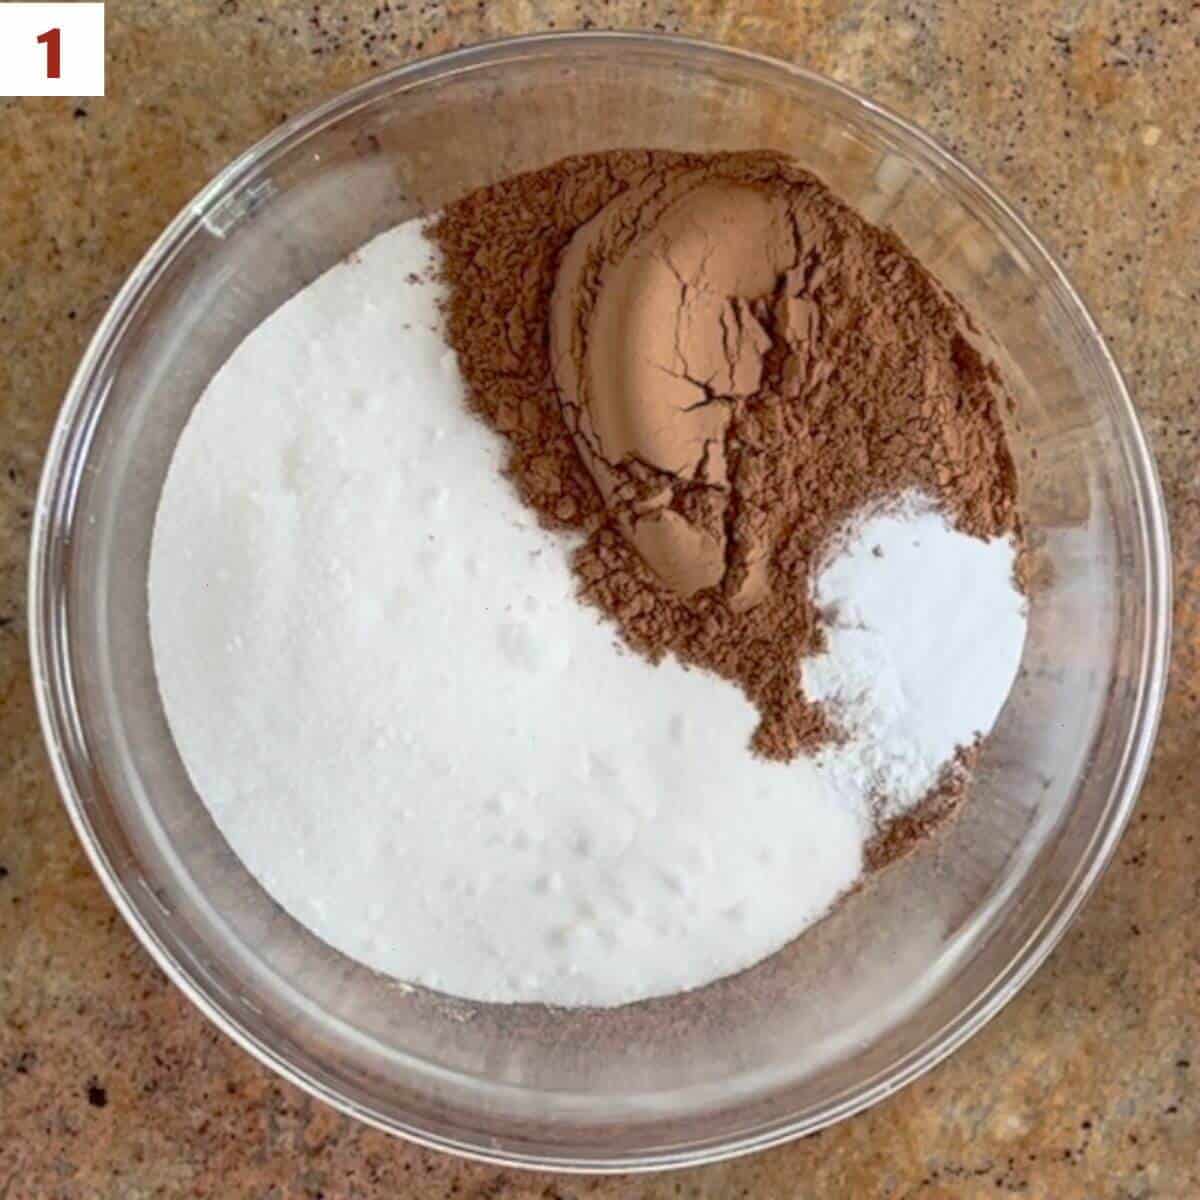 Mixing flour, sugar, cocoa powder, baking powder, baking soda, and salt in a glass bowl.